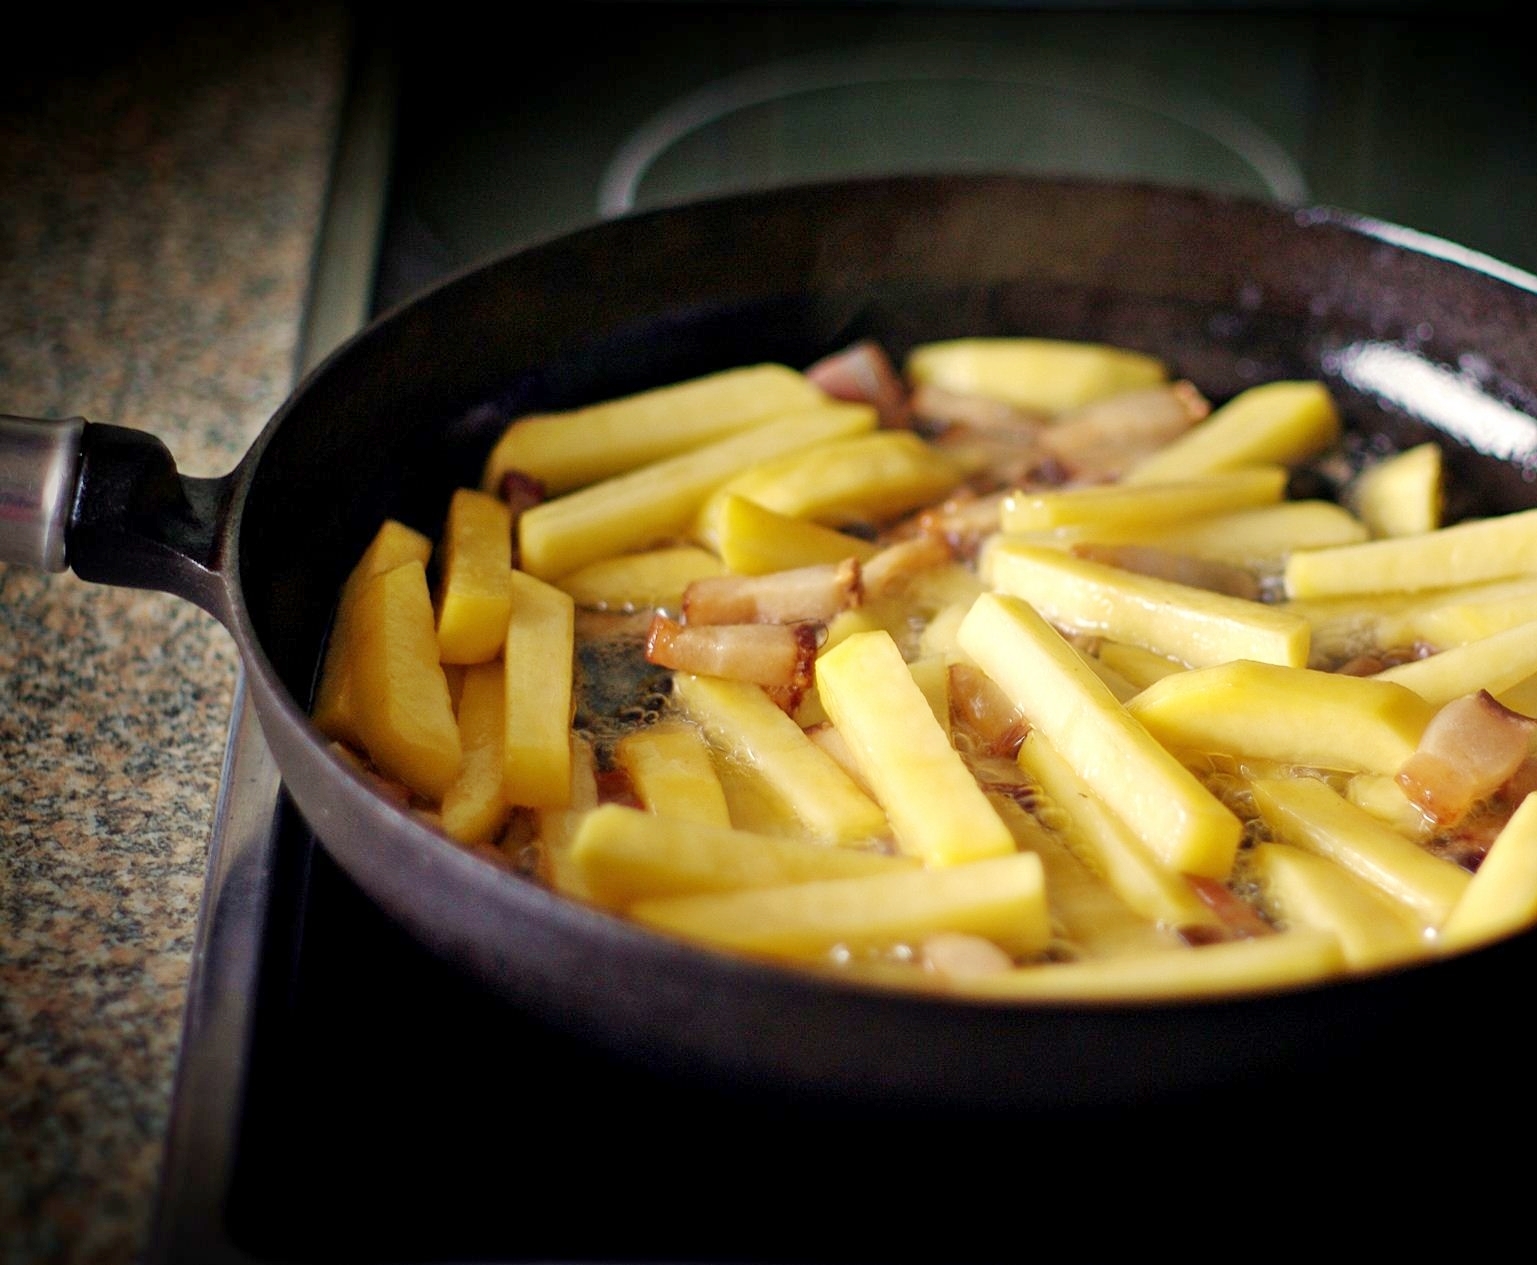 Жареная картошка на воде на сковороде. Жареная картошка на сковороде. Картофель жареный на сковороде. Картошка жарится на сковороде. Поджаренная картошка на сковороде.